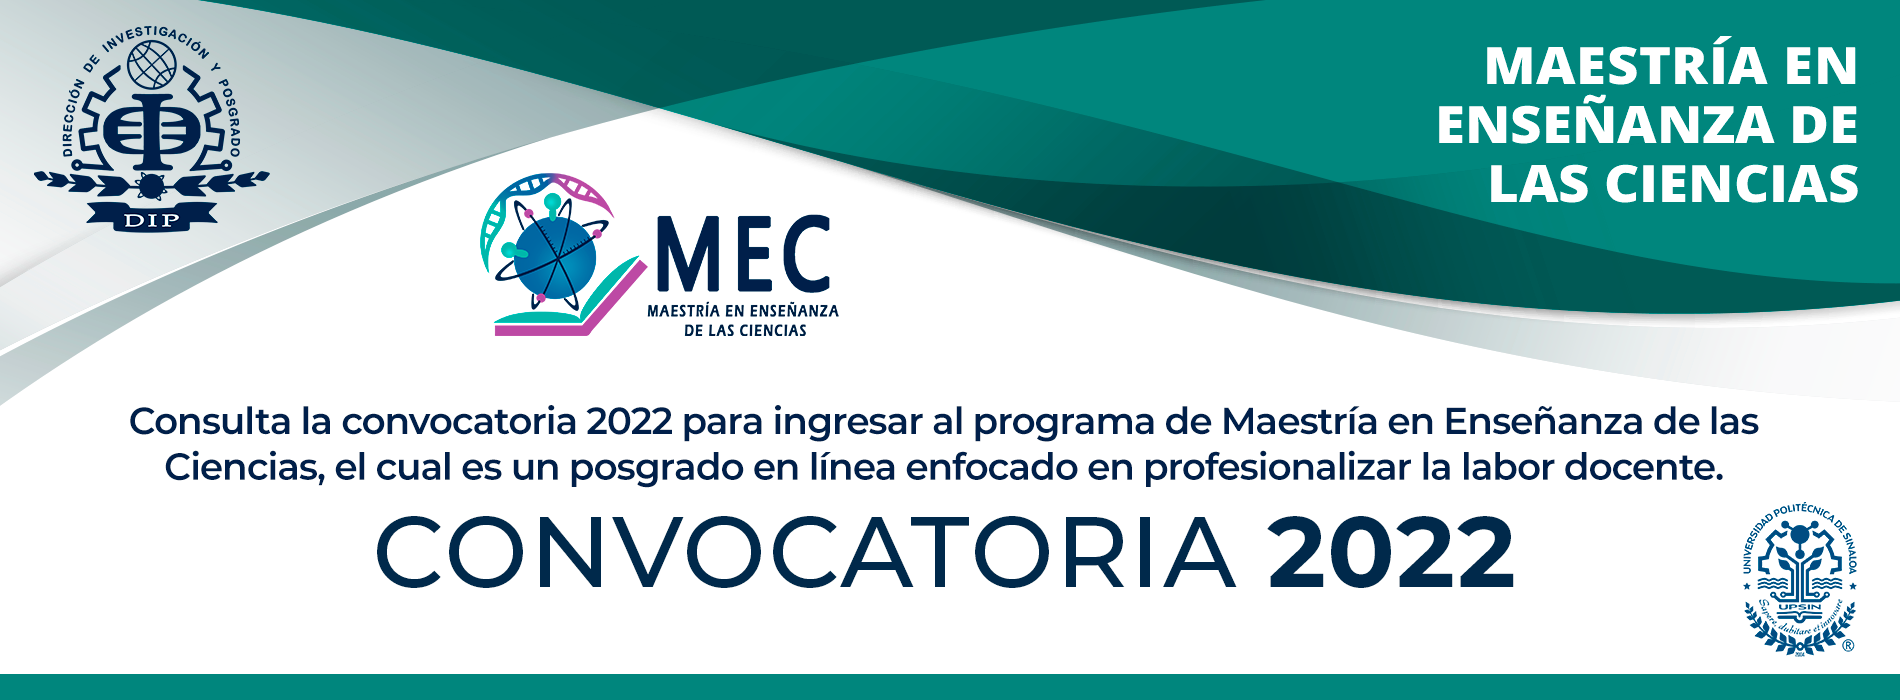 Convocatoria MEC 2022